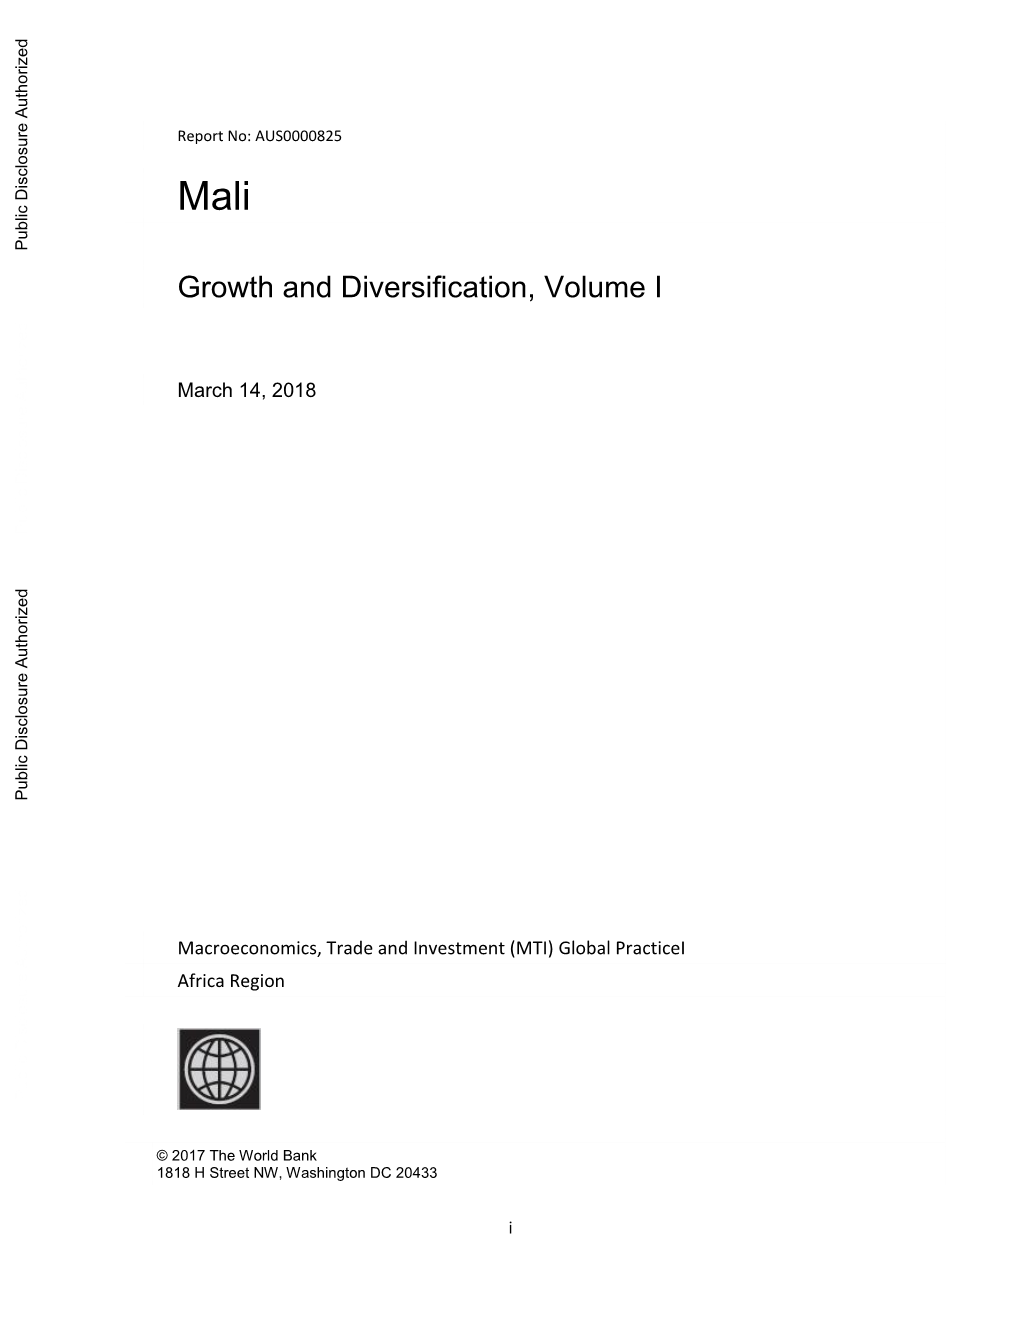 Mali Growth and Diversification